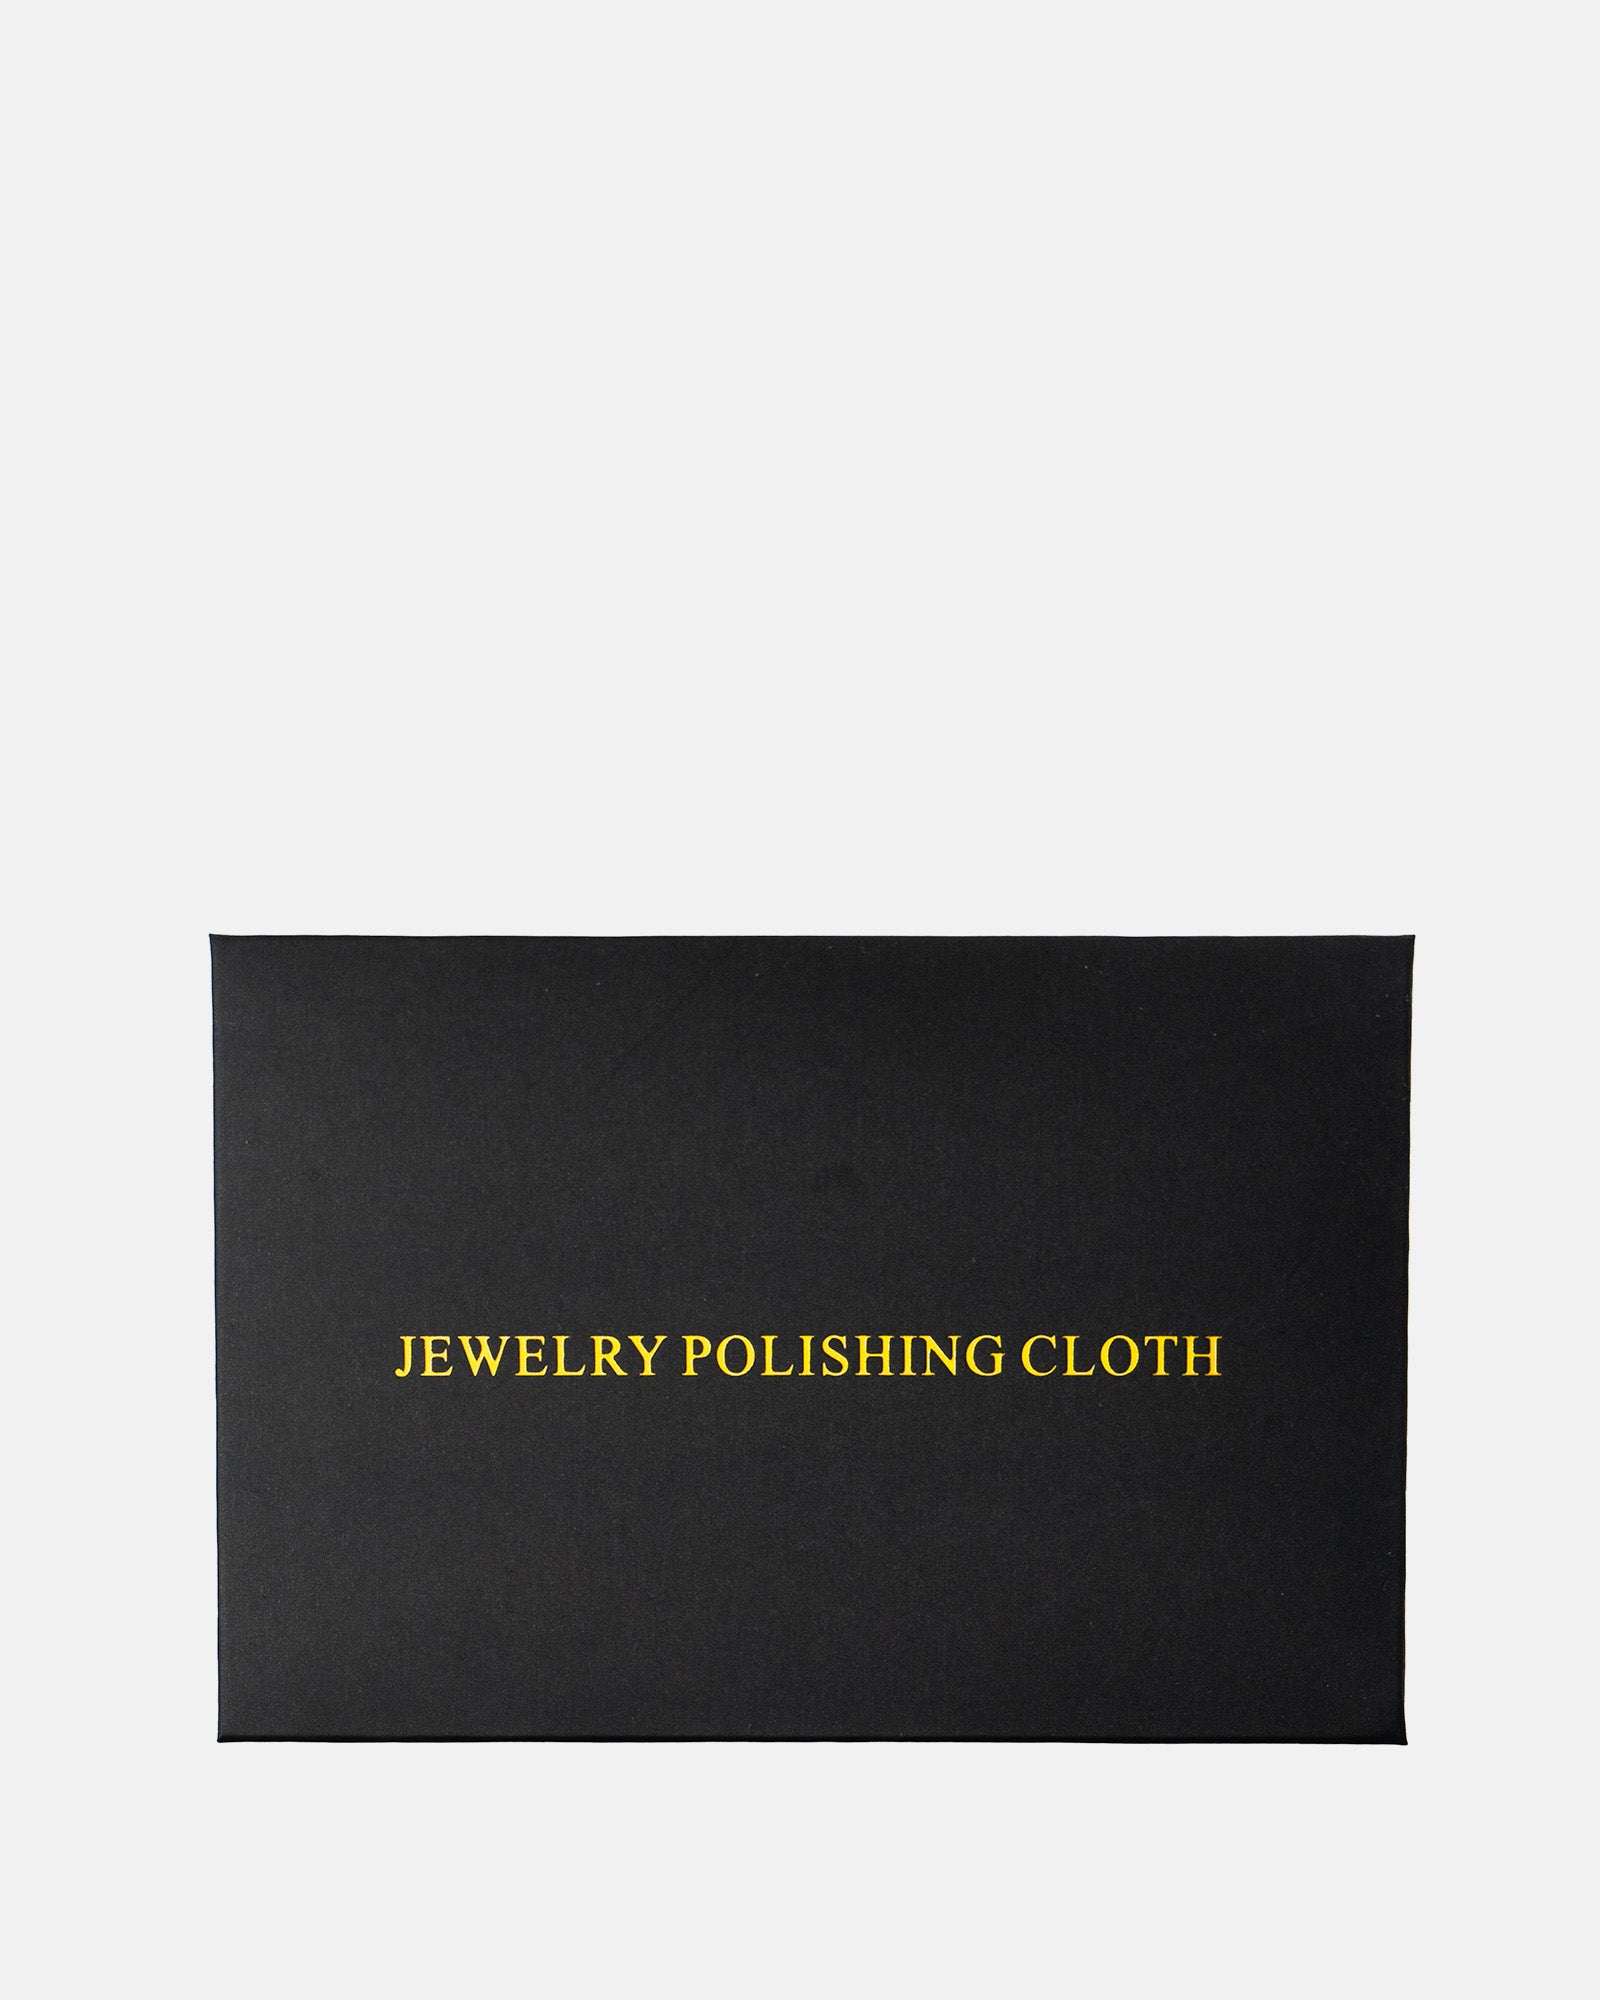 Jewelry Polish Cloth